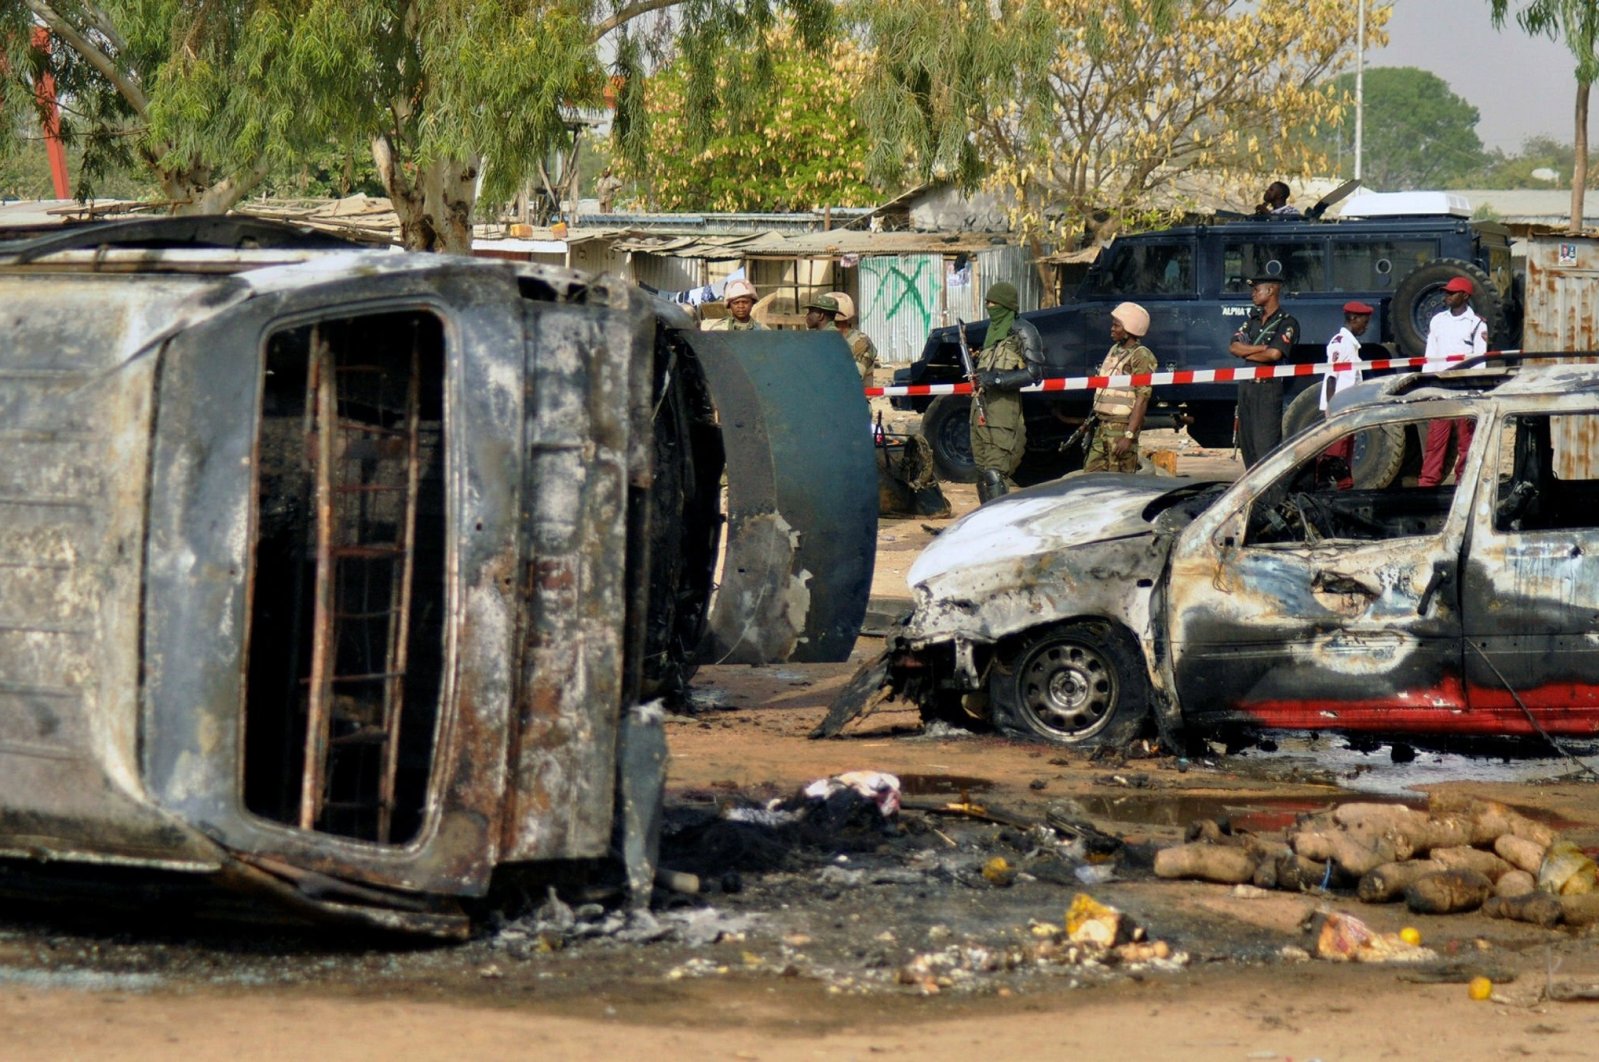 Boko Haram leaders killed themselves during